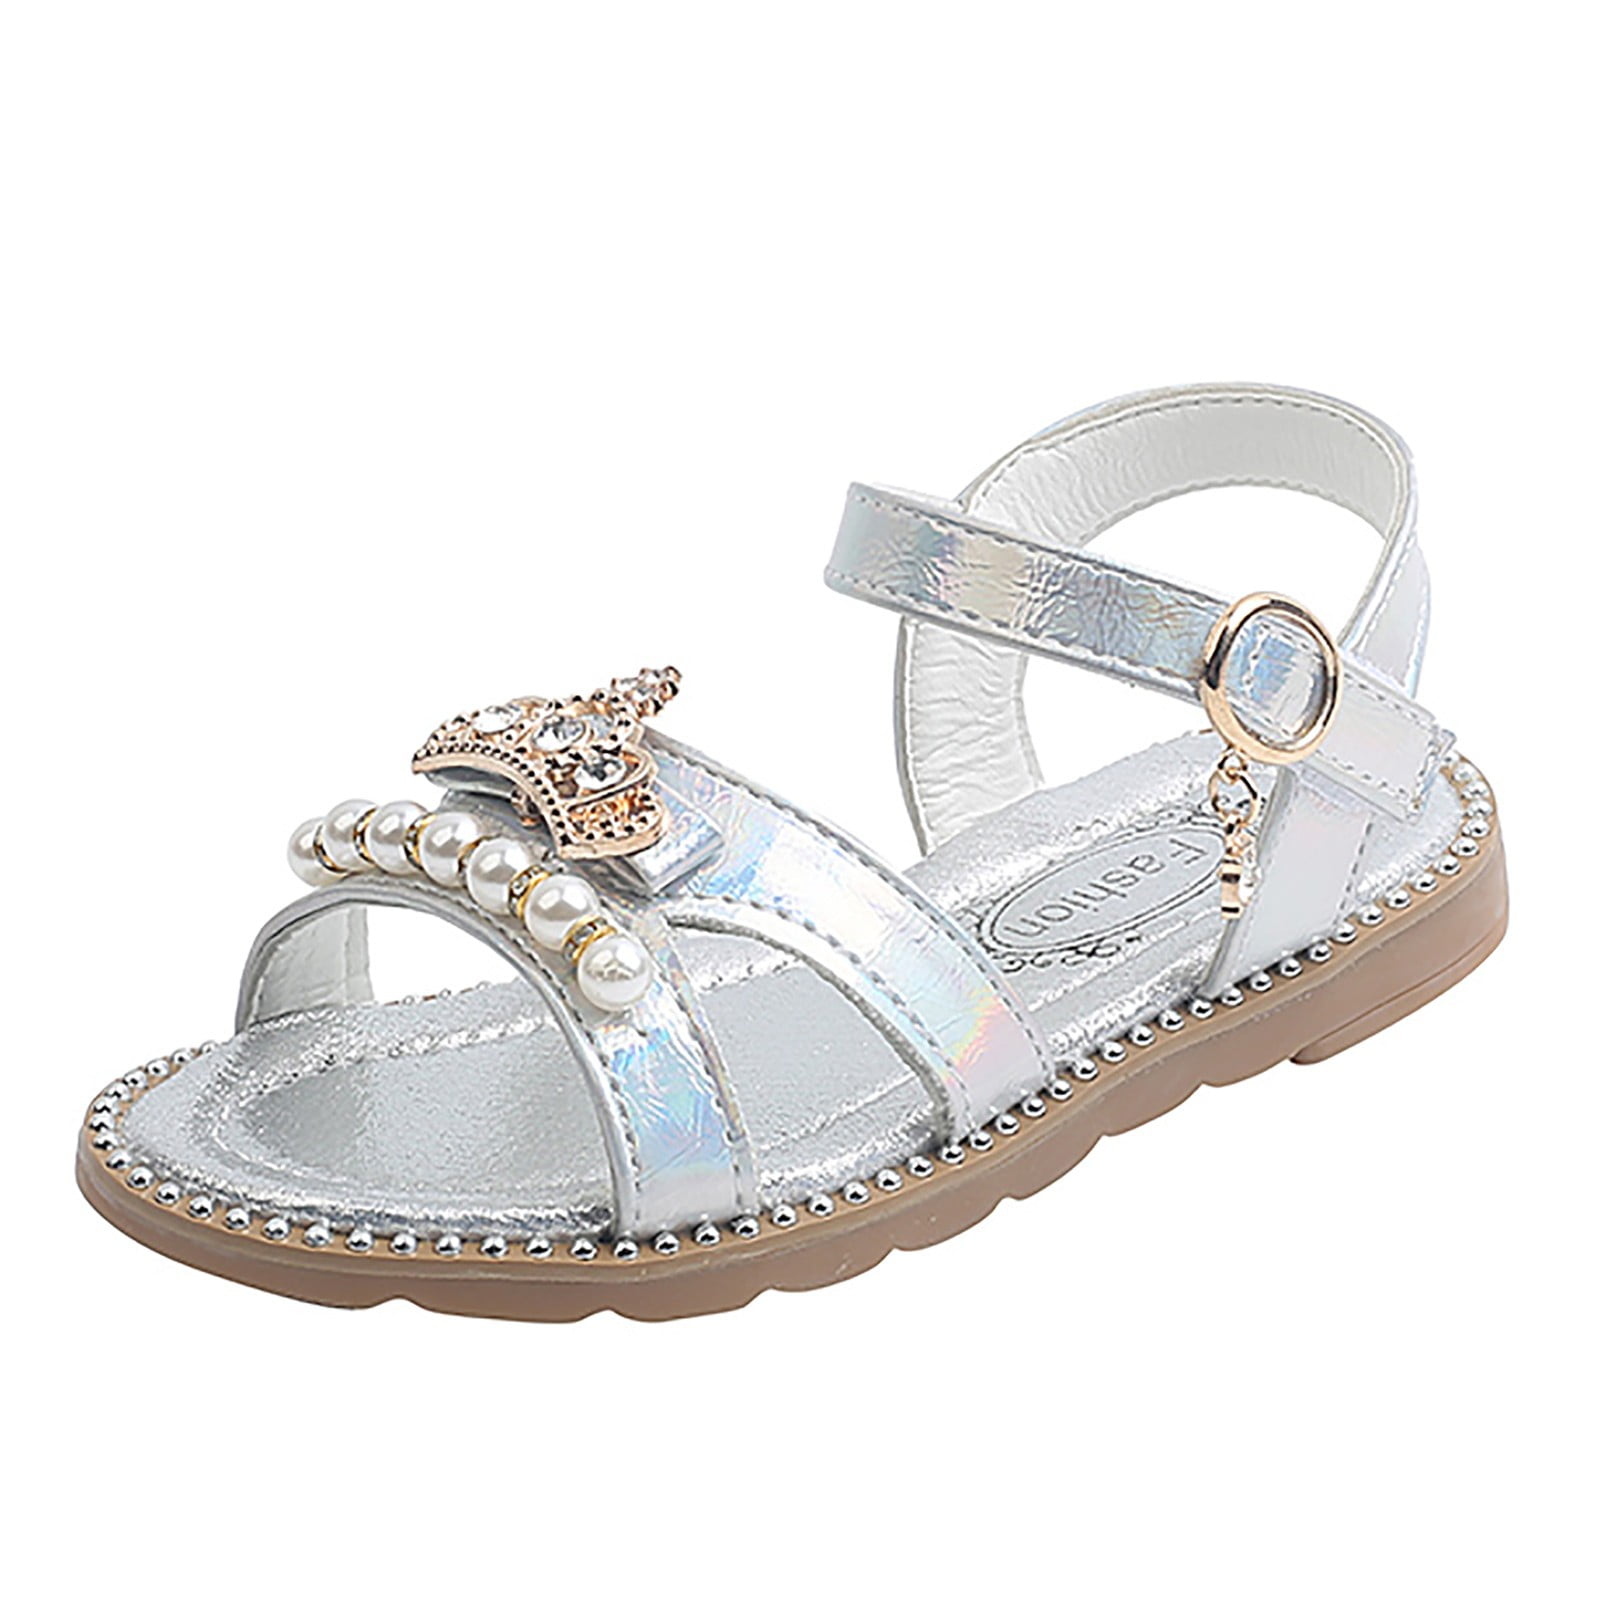 Girls' Summer Casual Pearl Beach Wear Fashion Princess Flat Shoes ...